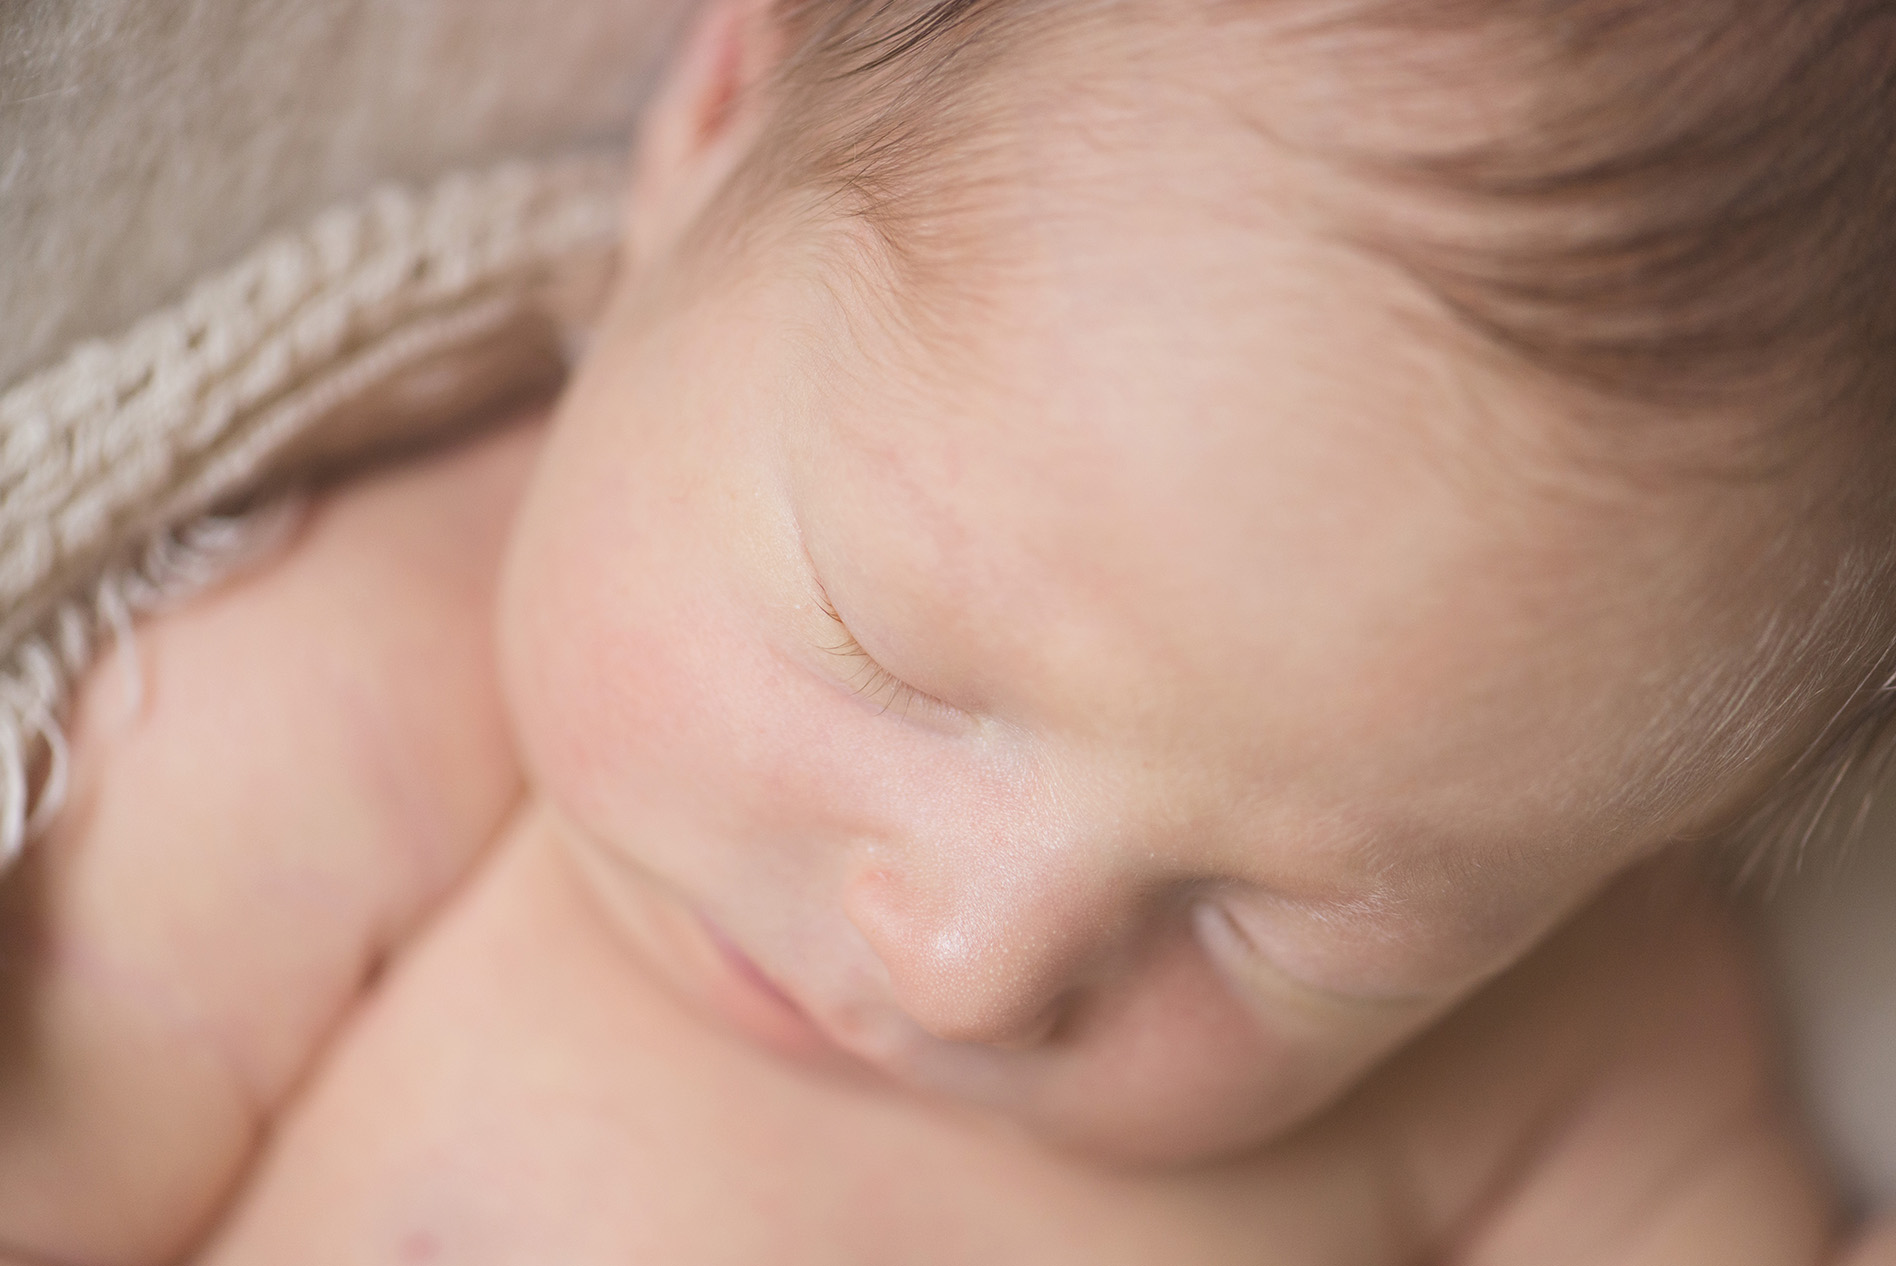 Atlanta newborn photographer, atlanta newborn photographers, Marietta newborn photographer